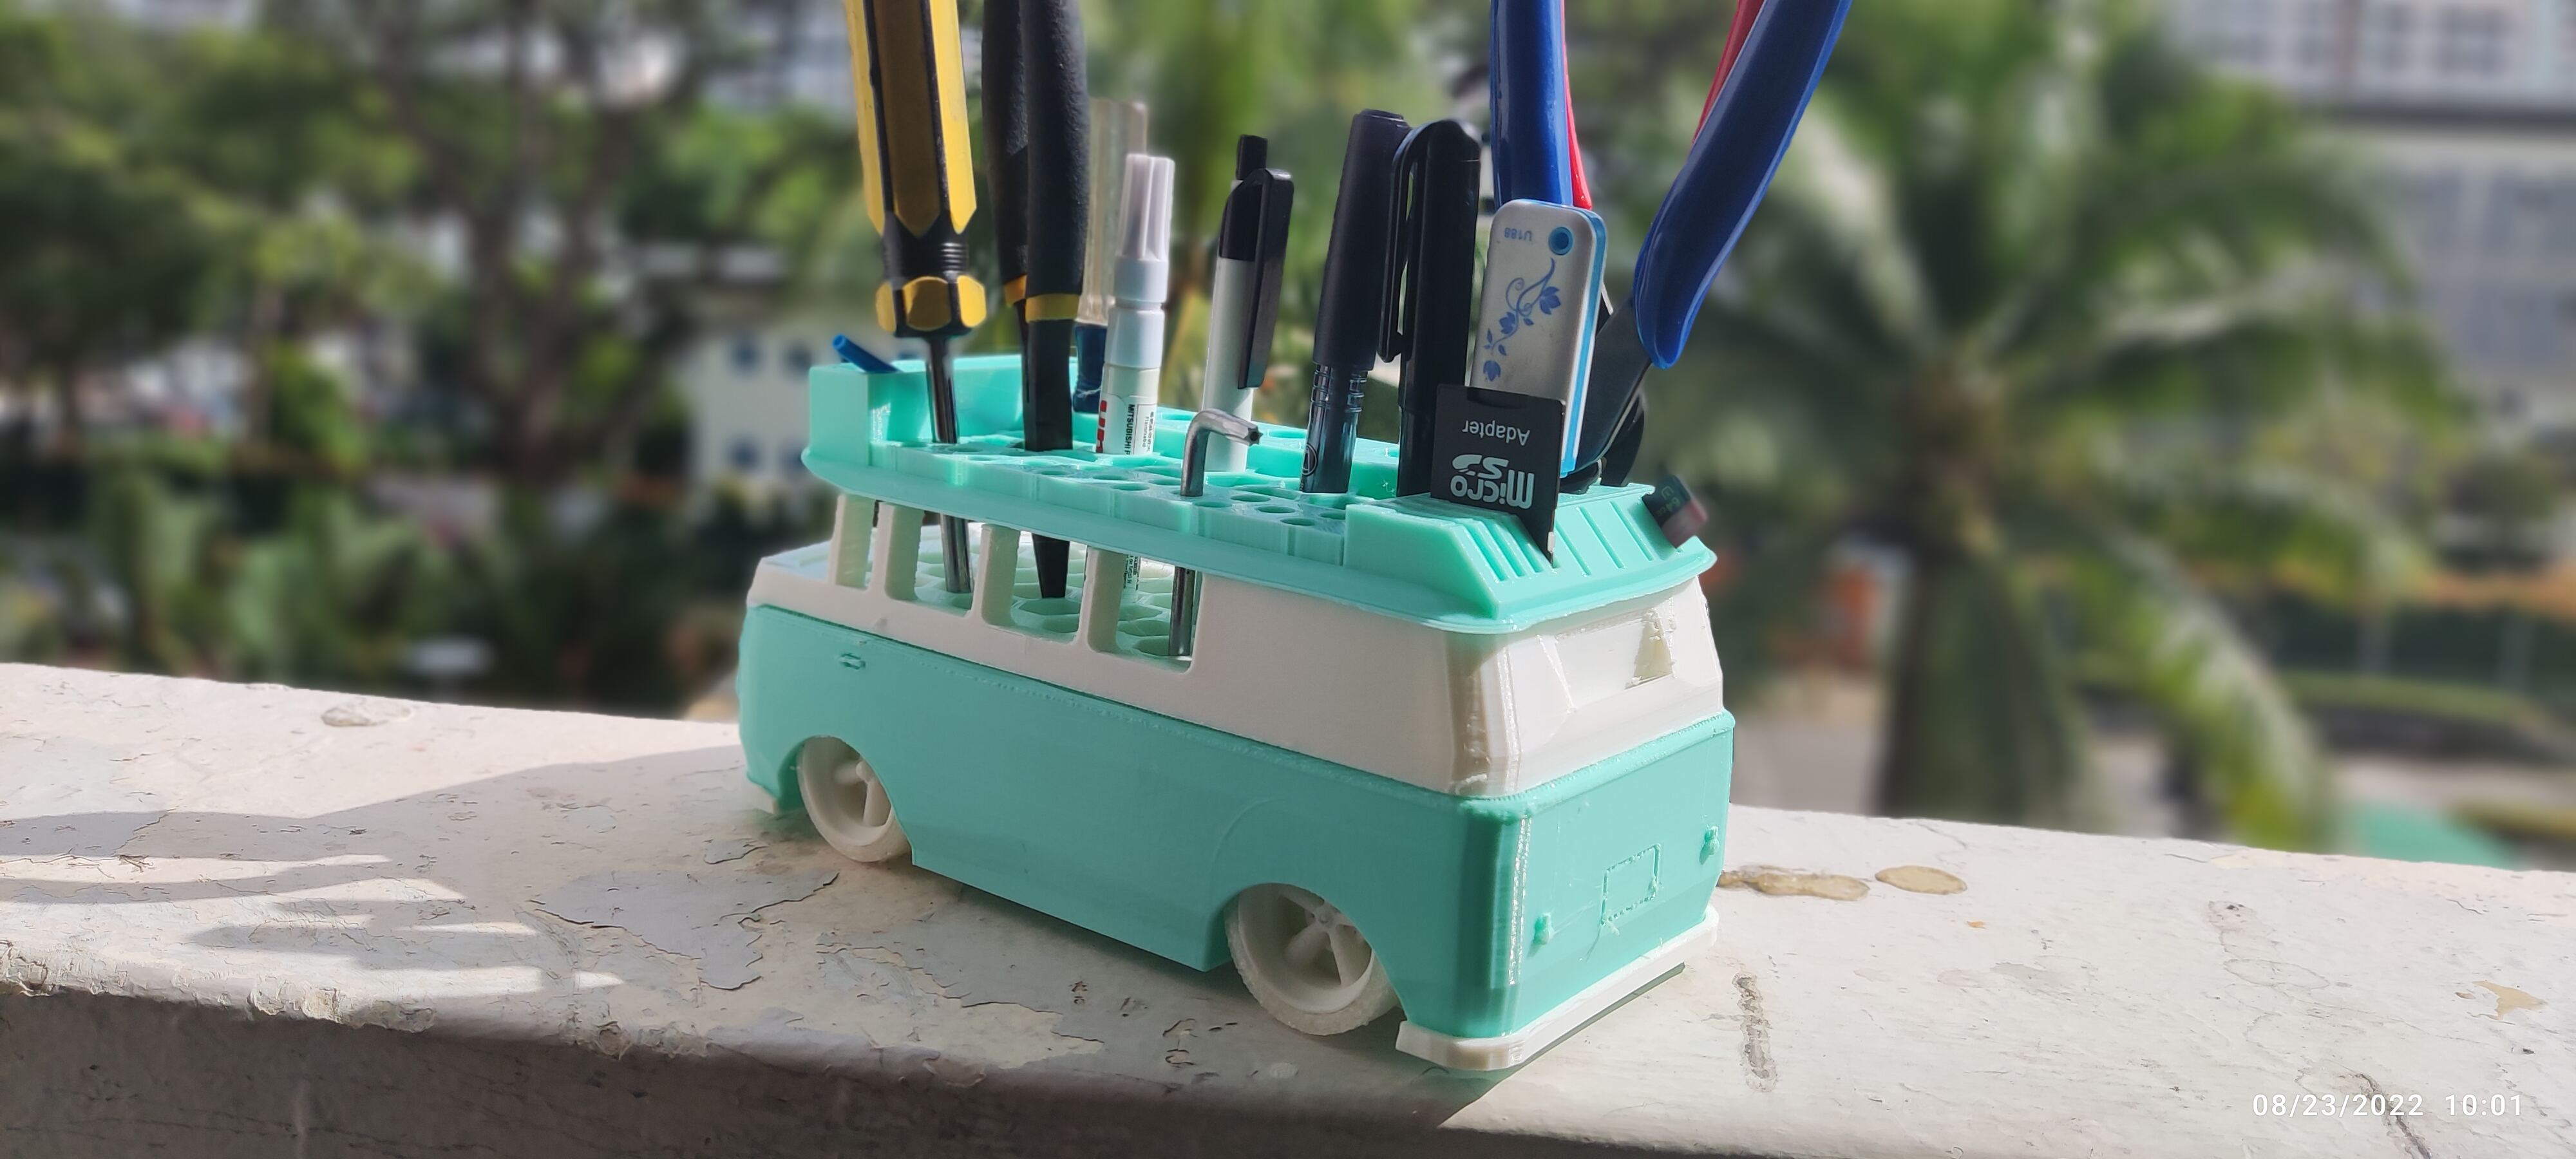 Remix VW Maker Tools Pen Holder